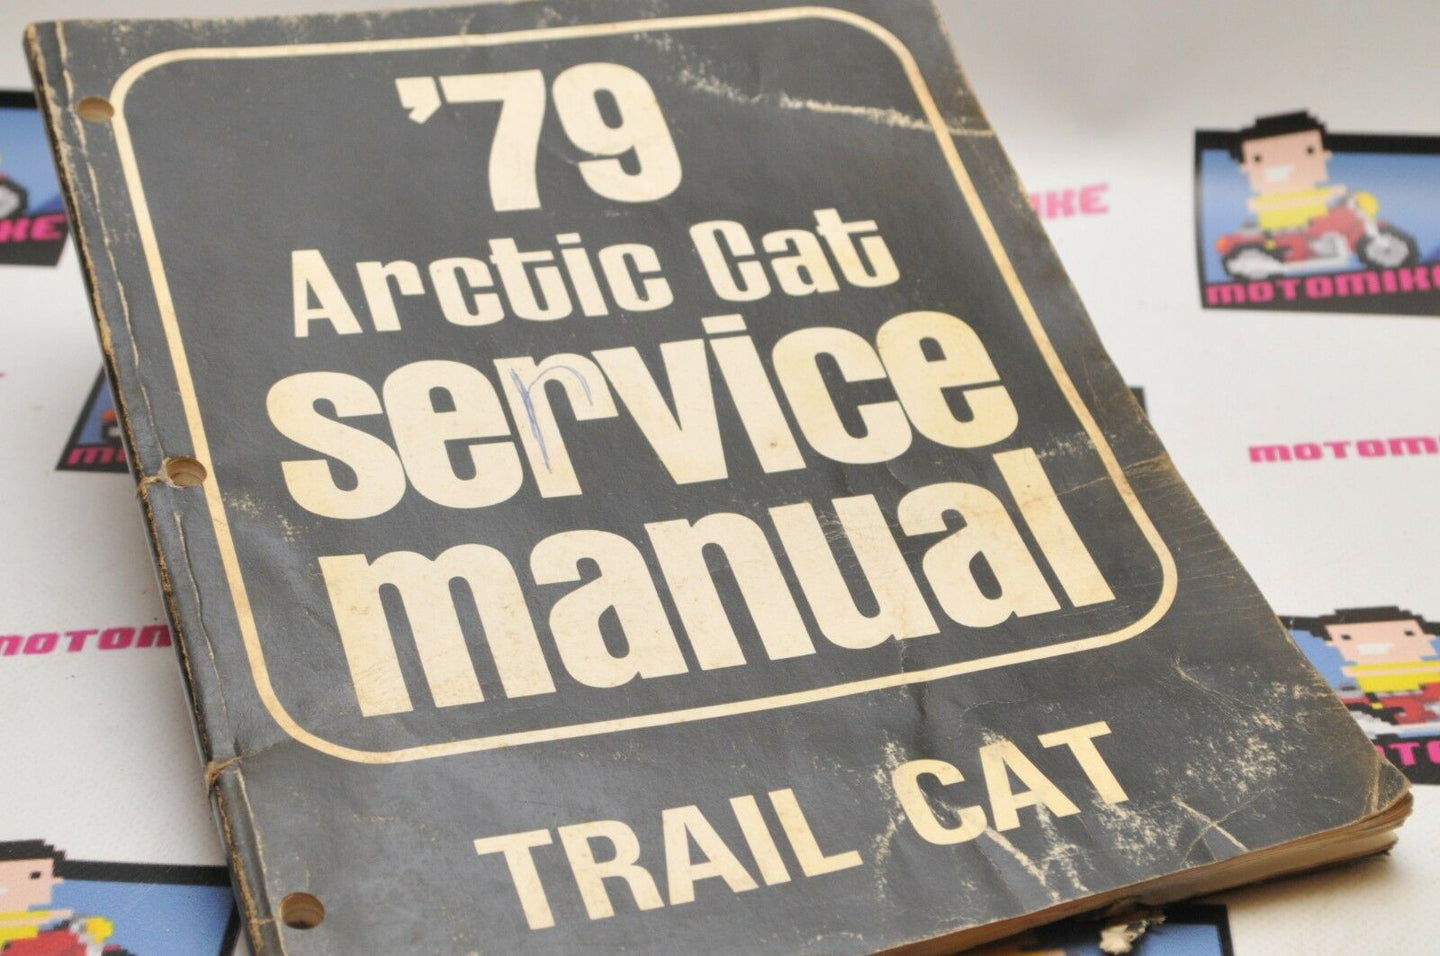 Genuine ARCTIC CAT Factory Service Shop Manual  1979 TRAIL CAT 0153-279 *DAMAGED